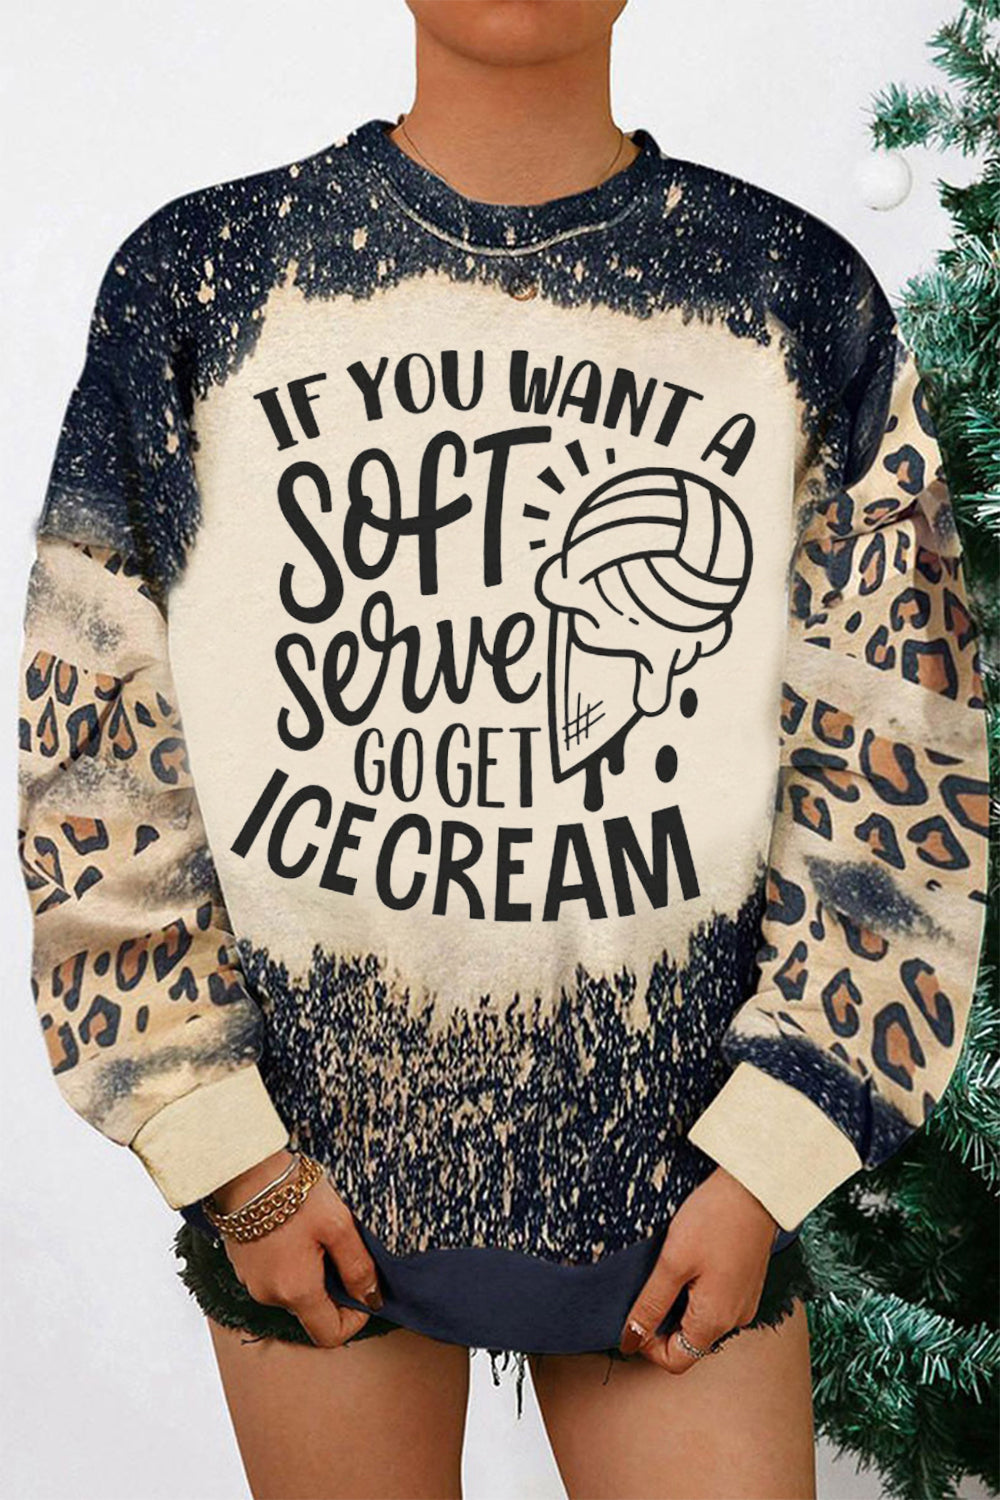 If You Want a Soft Serve Go Get Ice Cream Print Sweatshirt